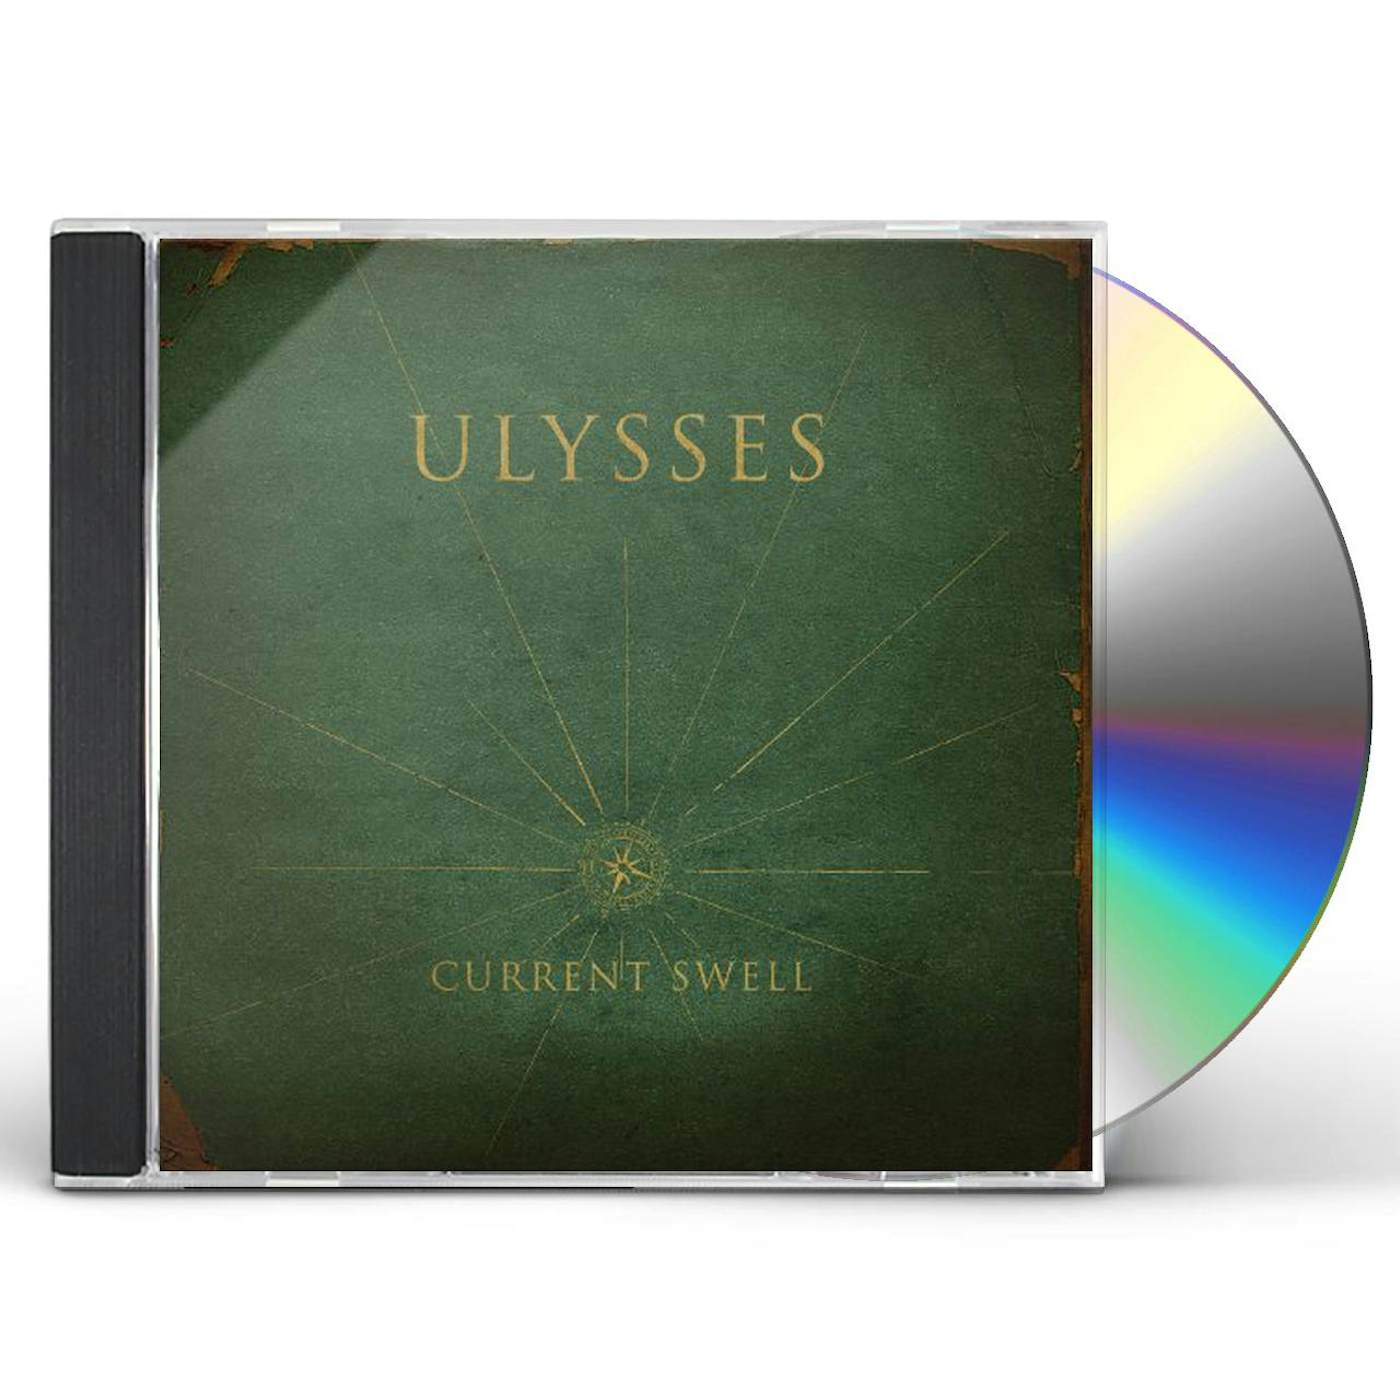 Current Swell ULYSSES CD